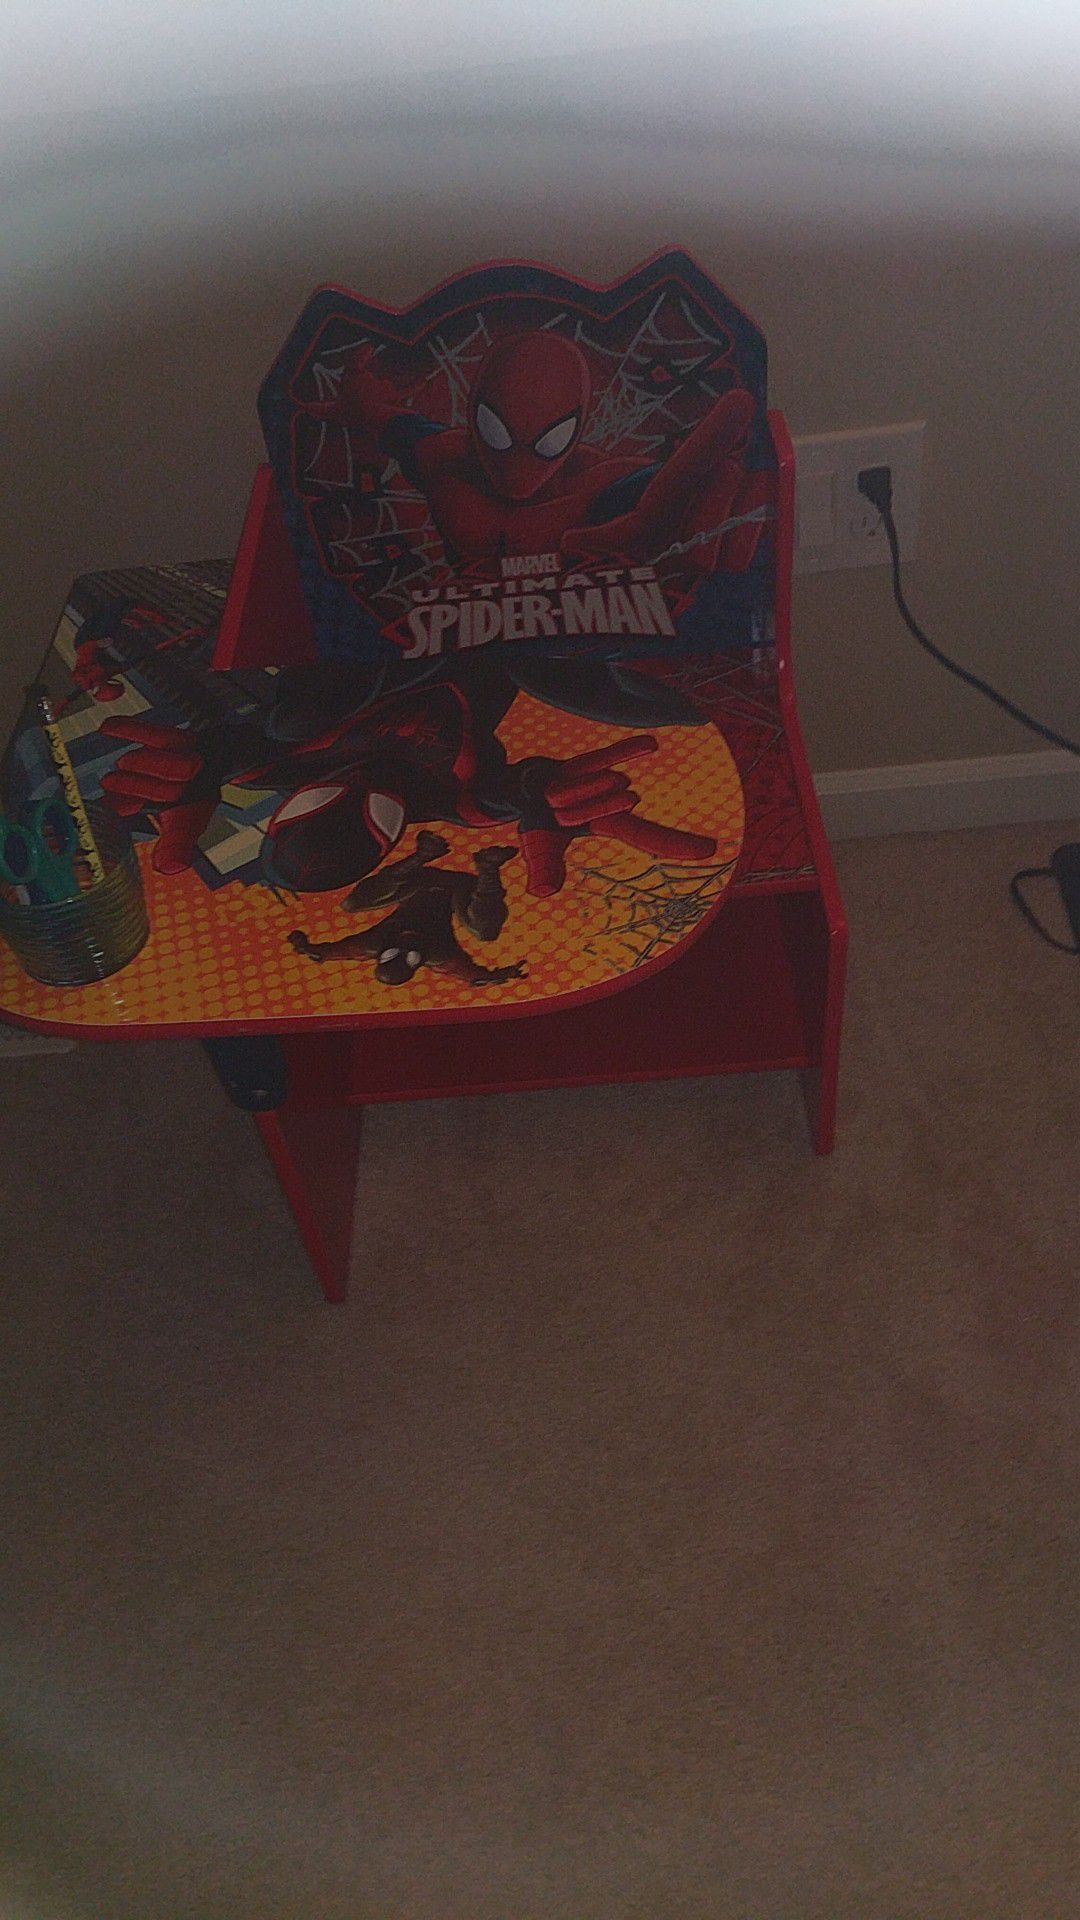 Spiderman activity table